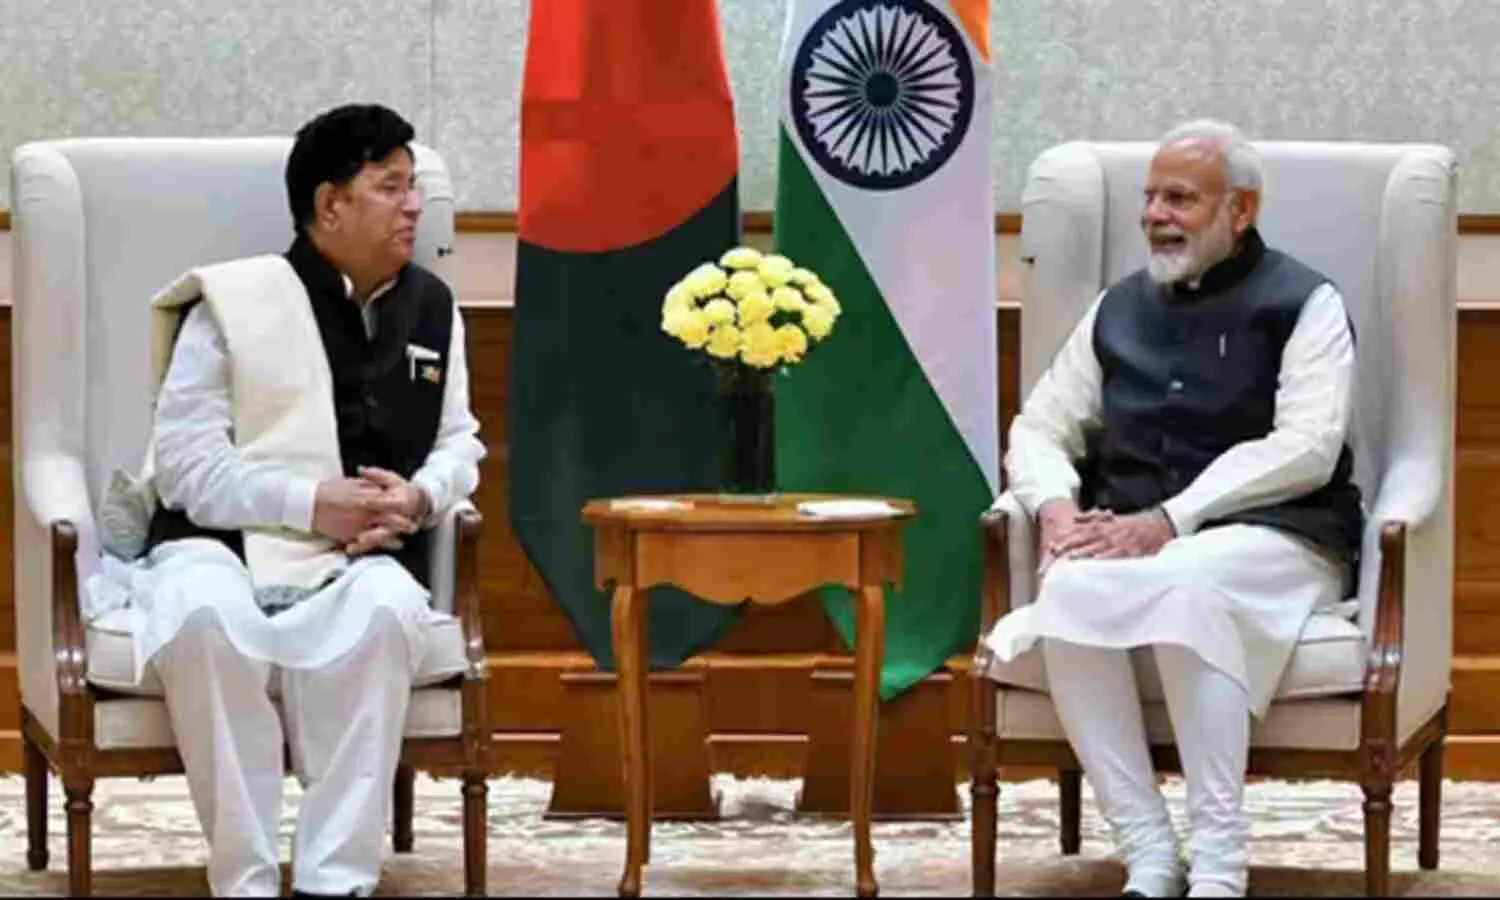 Bangladesh Foreign Minister Abdul Momen and PM Modi